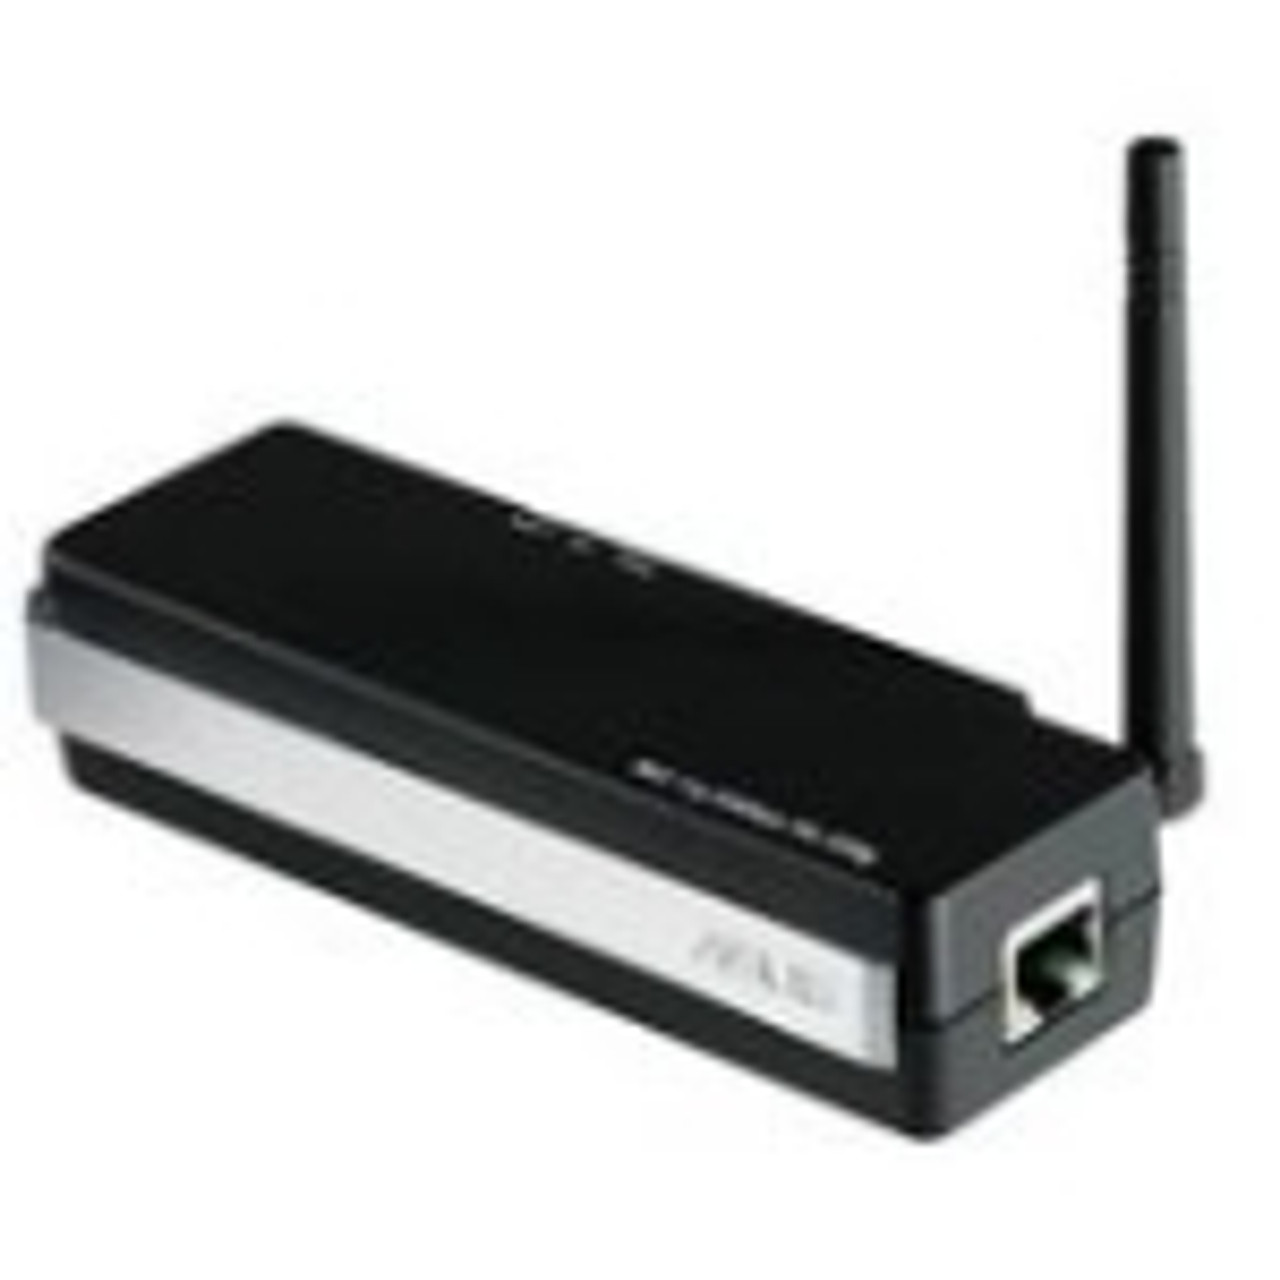 54Mbps Pocket Wireless Access Point WL-330g